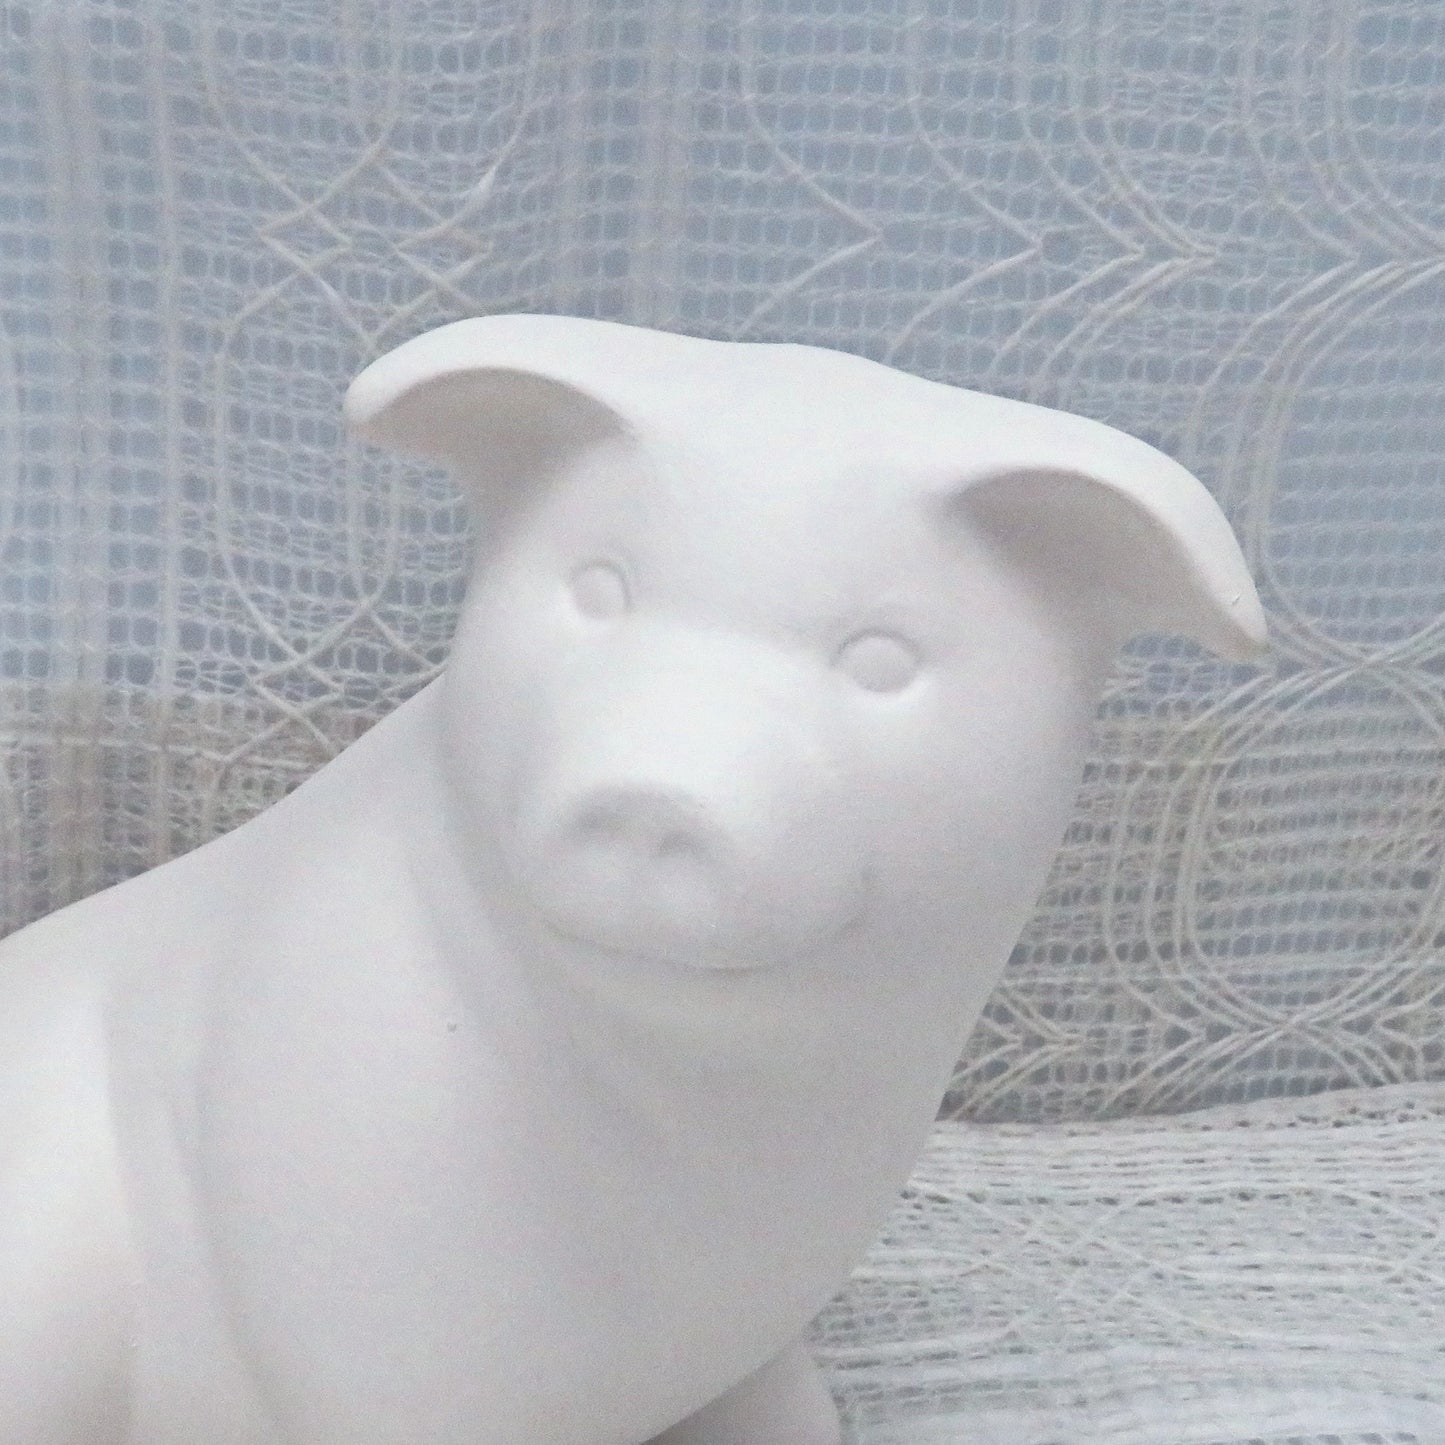 Handmade Ready to Paint Ceramic Pig Figurine, Sitting Pig Statue, Unpainted Ceramic Bisqueware, Paintable Ceramics, Ceramics to Paint